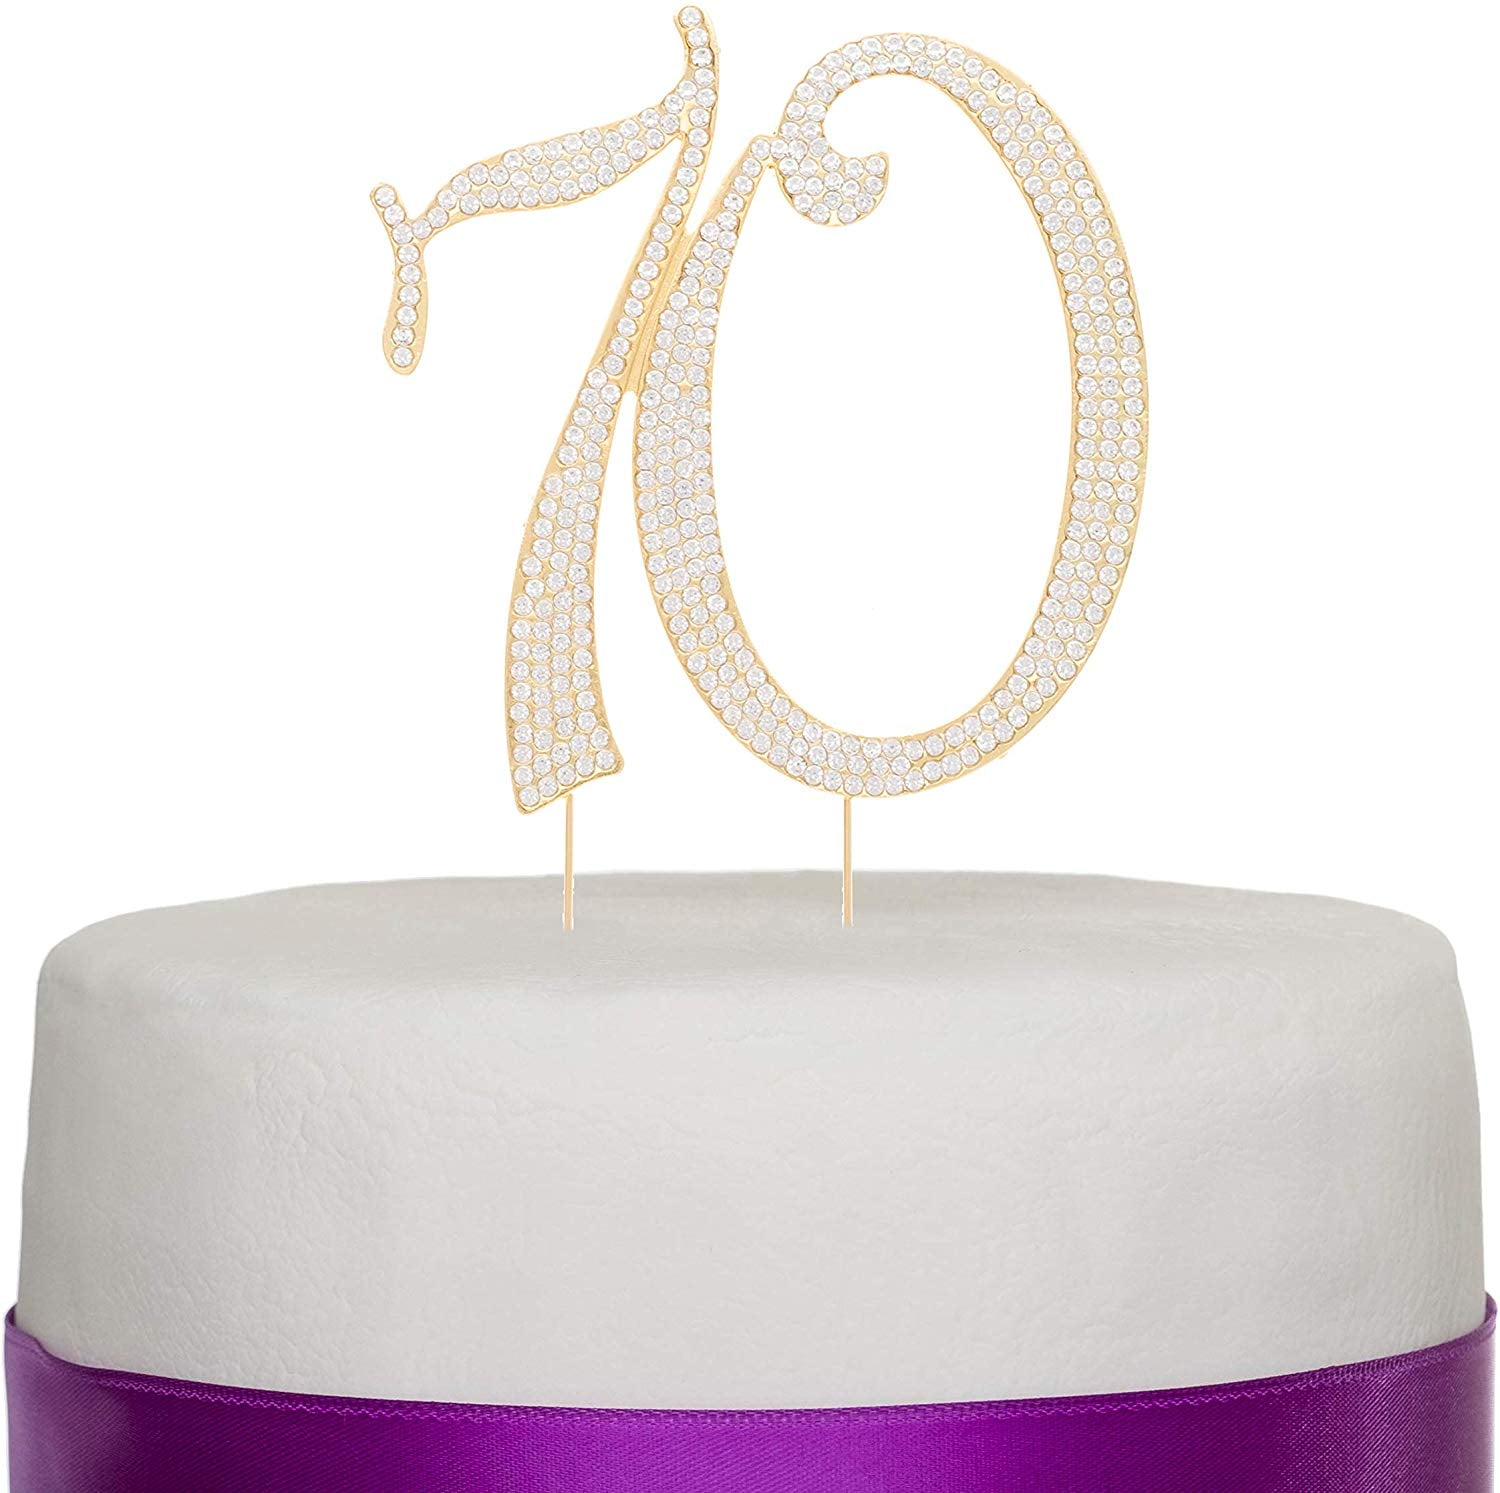 Basketball Cupcake Topper Black Gold Happy Birthday Cake Topper For Birthda*QE 